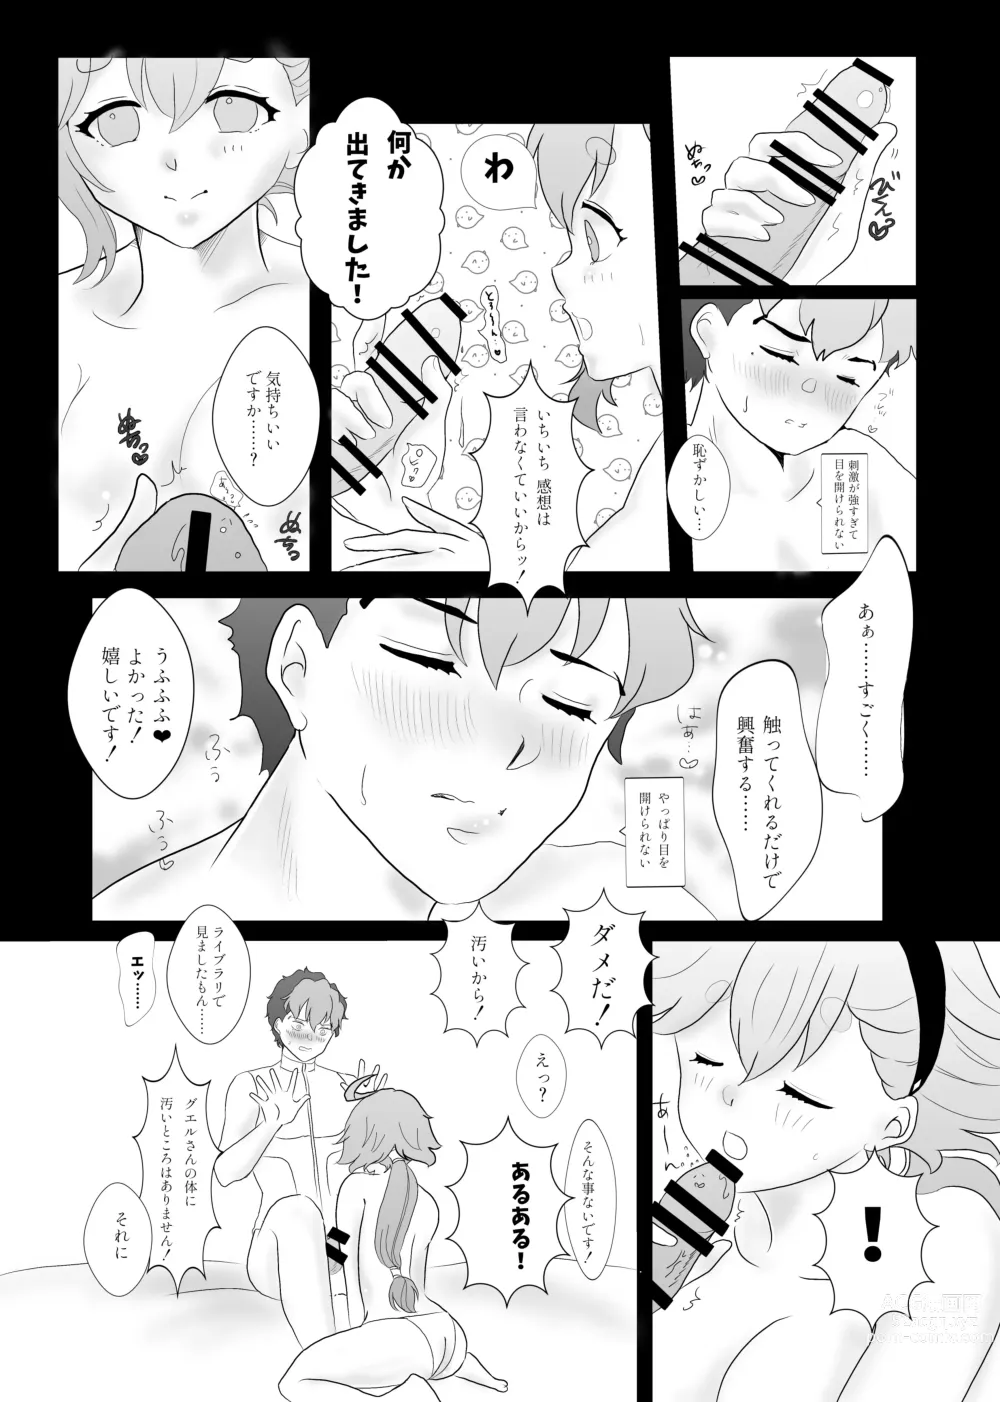 Page 7 of doujinshi Nichijō romantikku